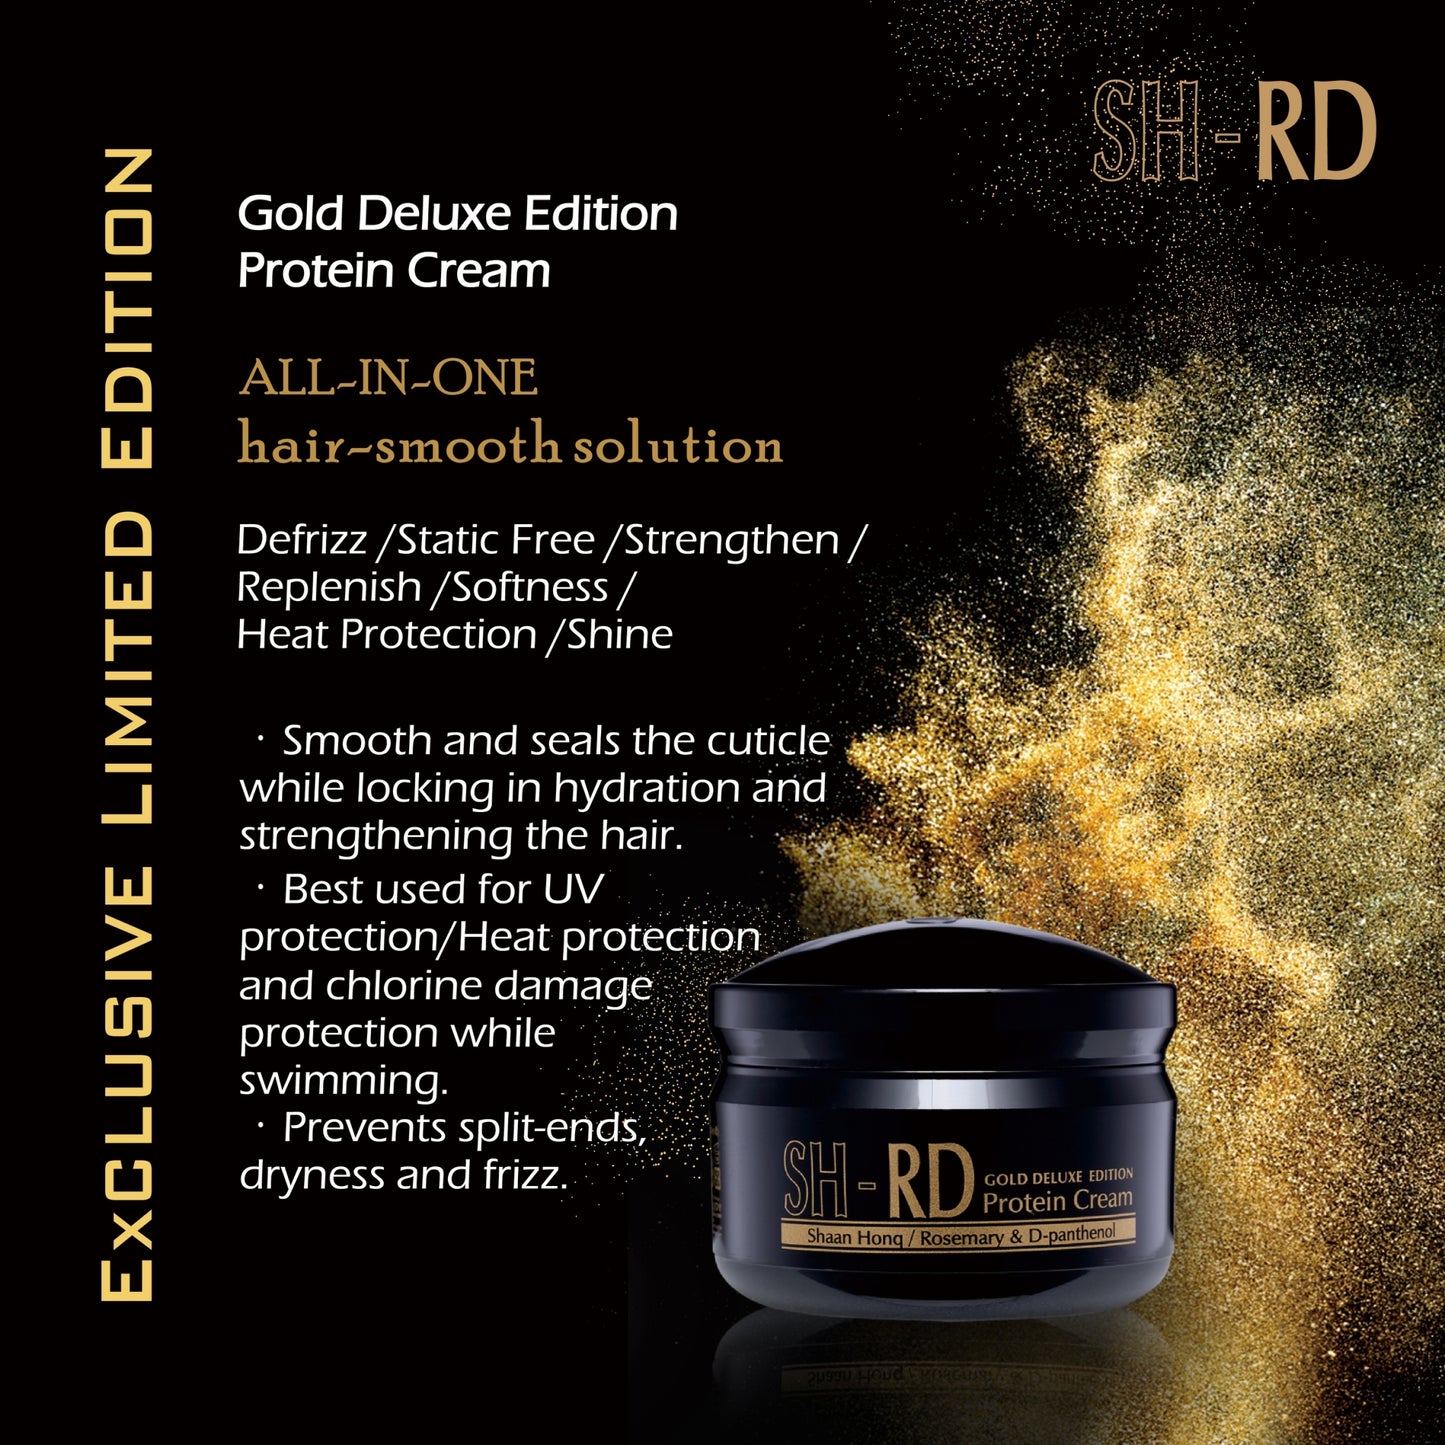 SH-RD Protein Cream Gold Deluxe Edition (2.71oz/80ml)